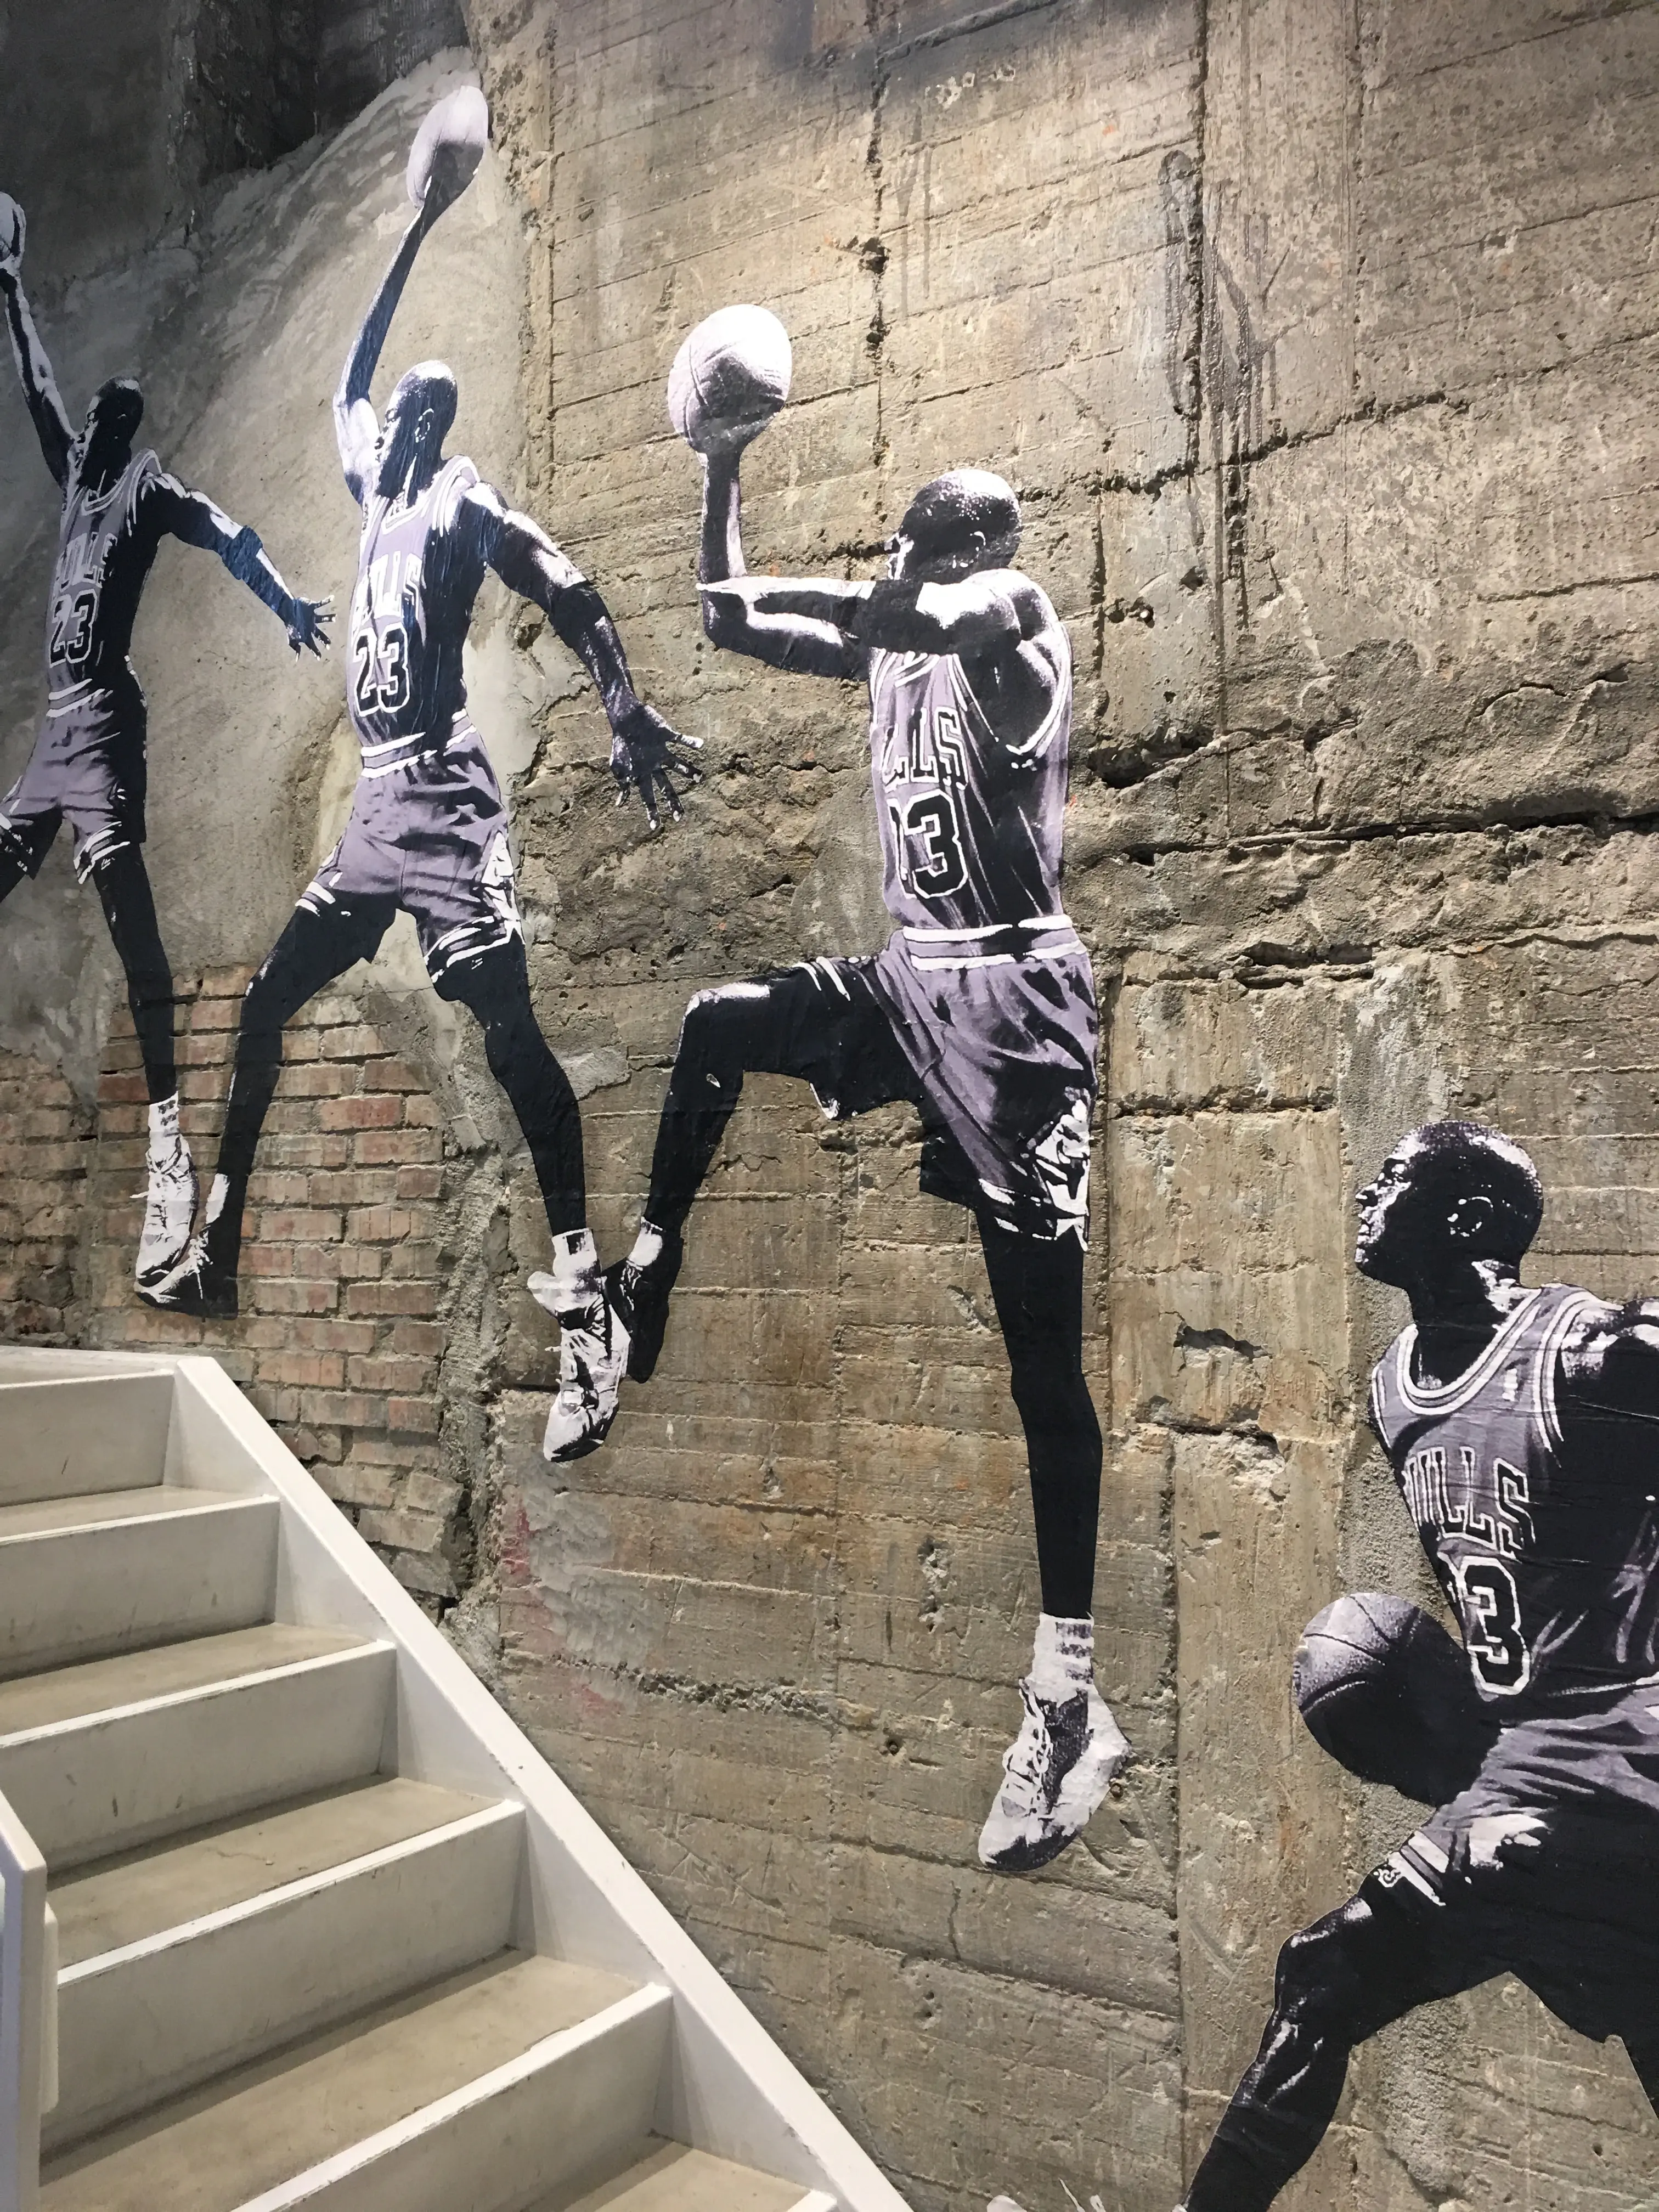 Mural of Michael Jordan Dunking Basketball.